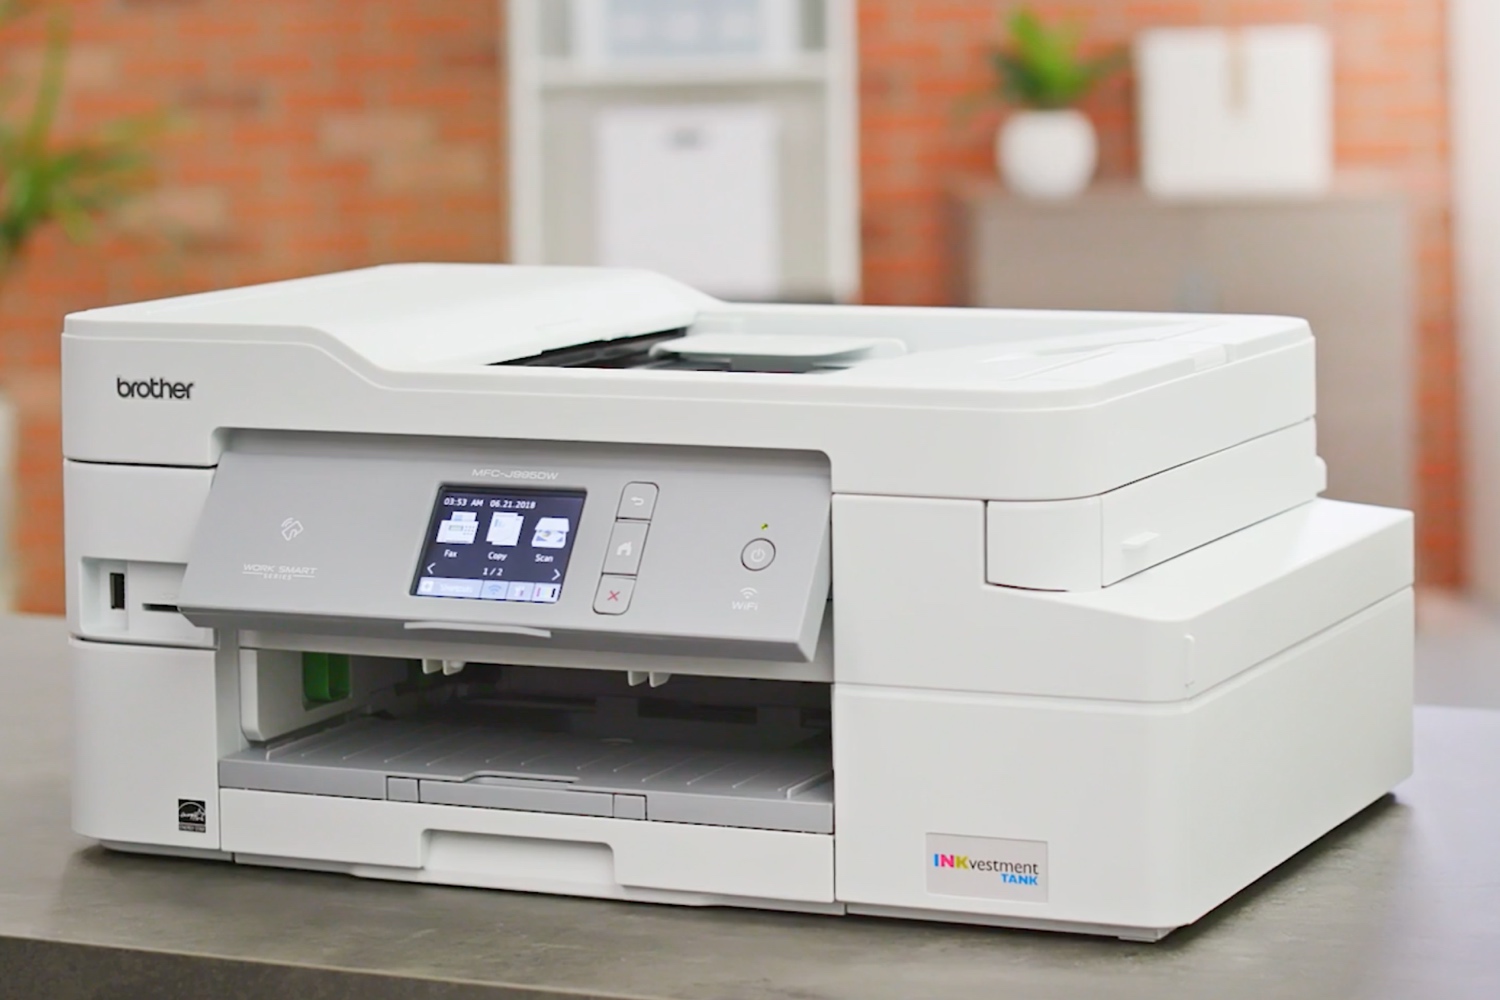 best printer for college student dorm